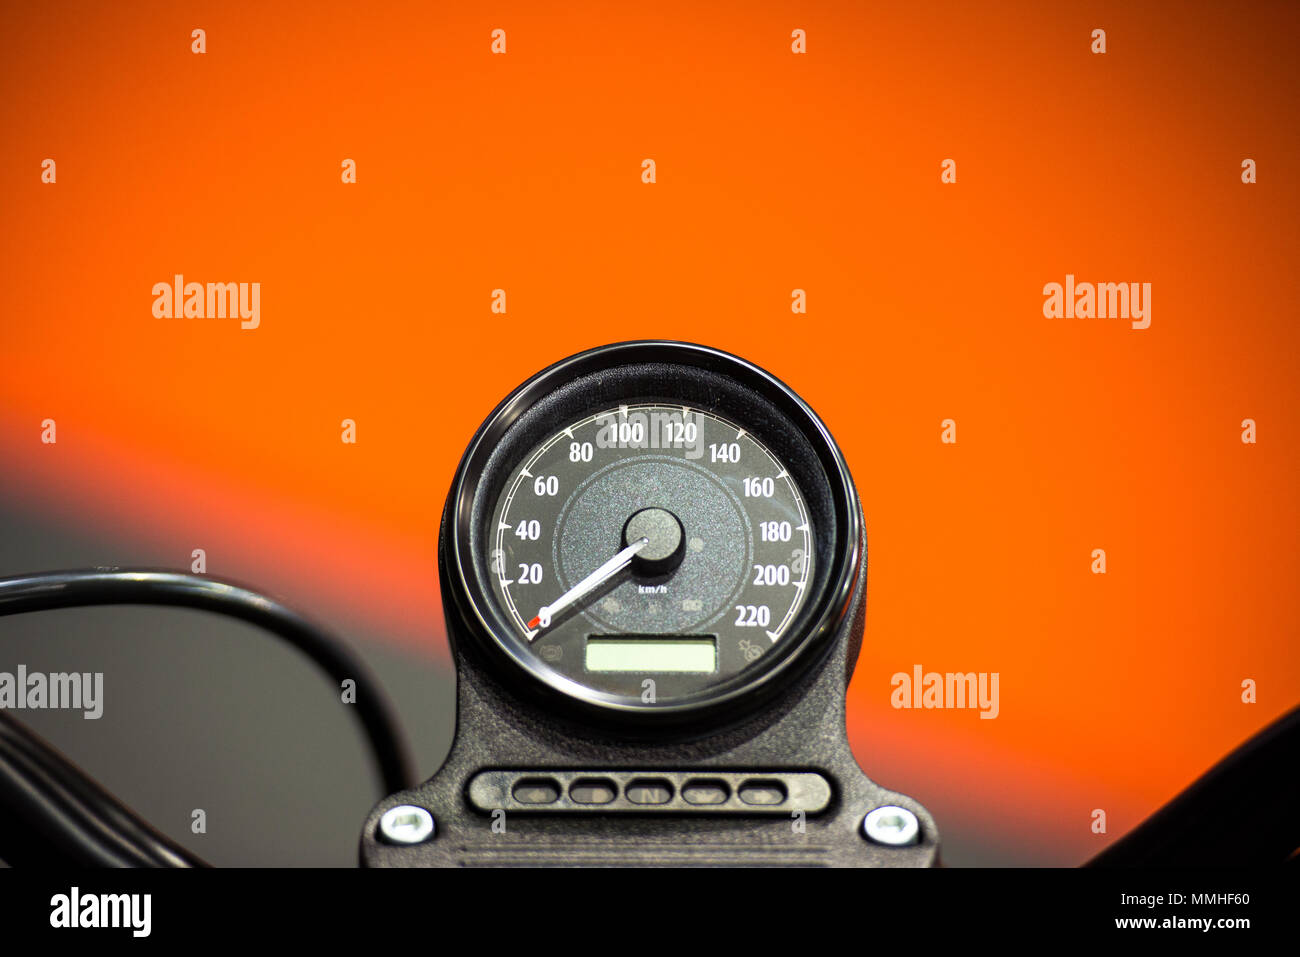 Motorcycle speedometer on dashboard showing kilometers per hour speed on orange background Stock Photo